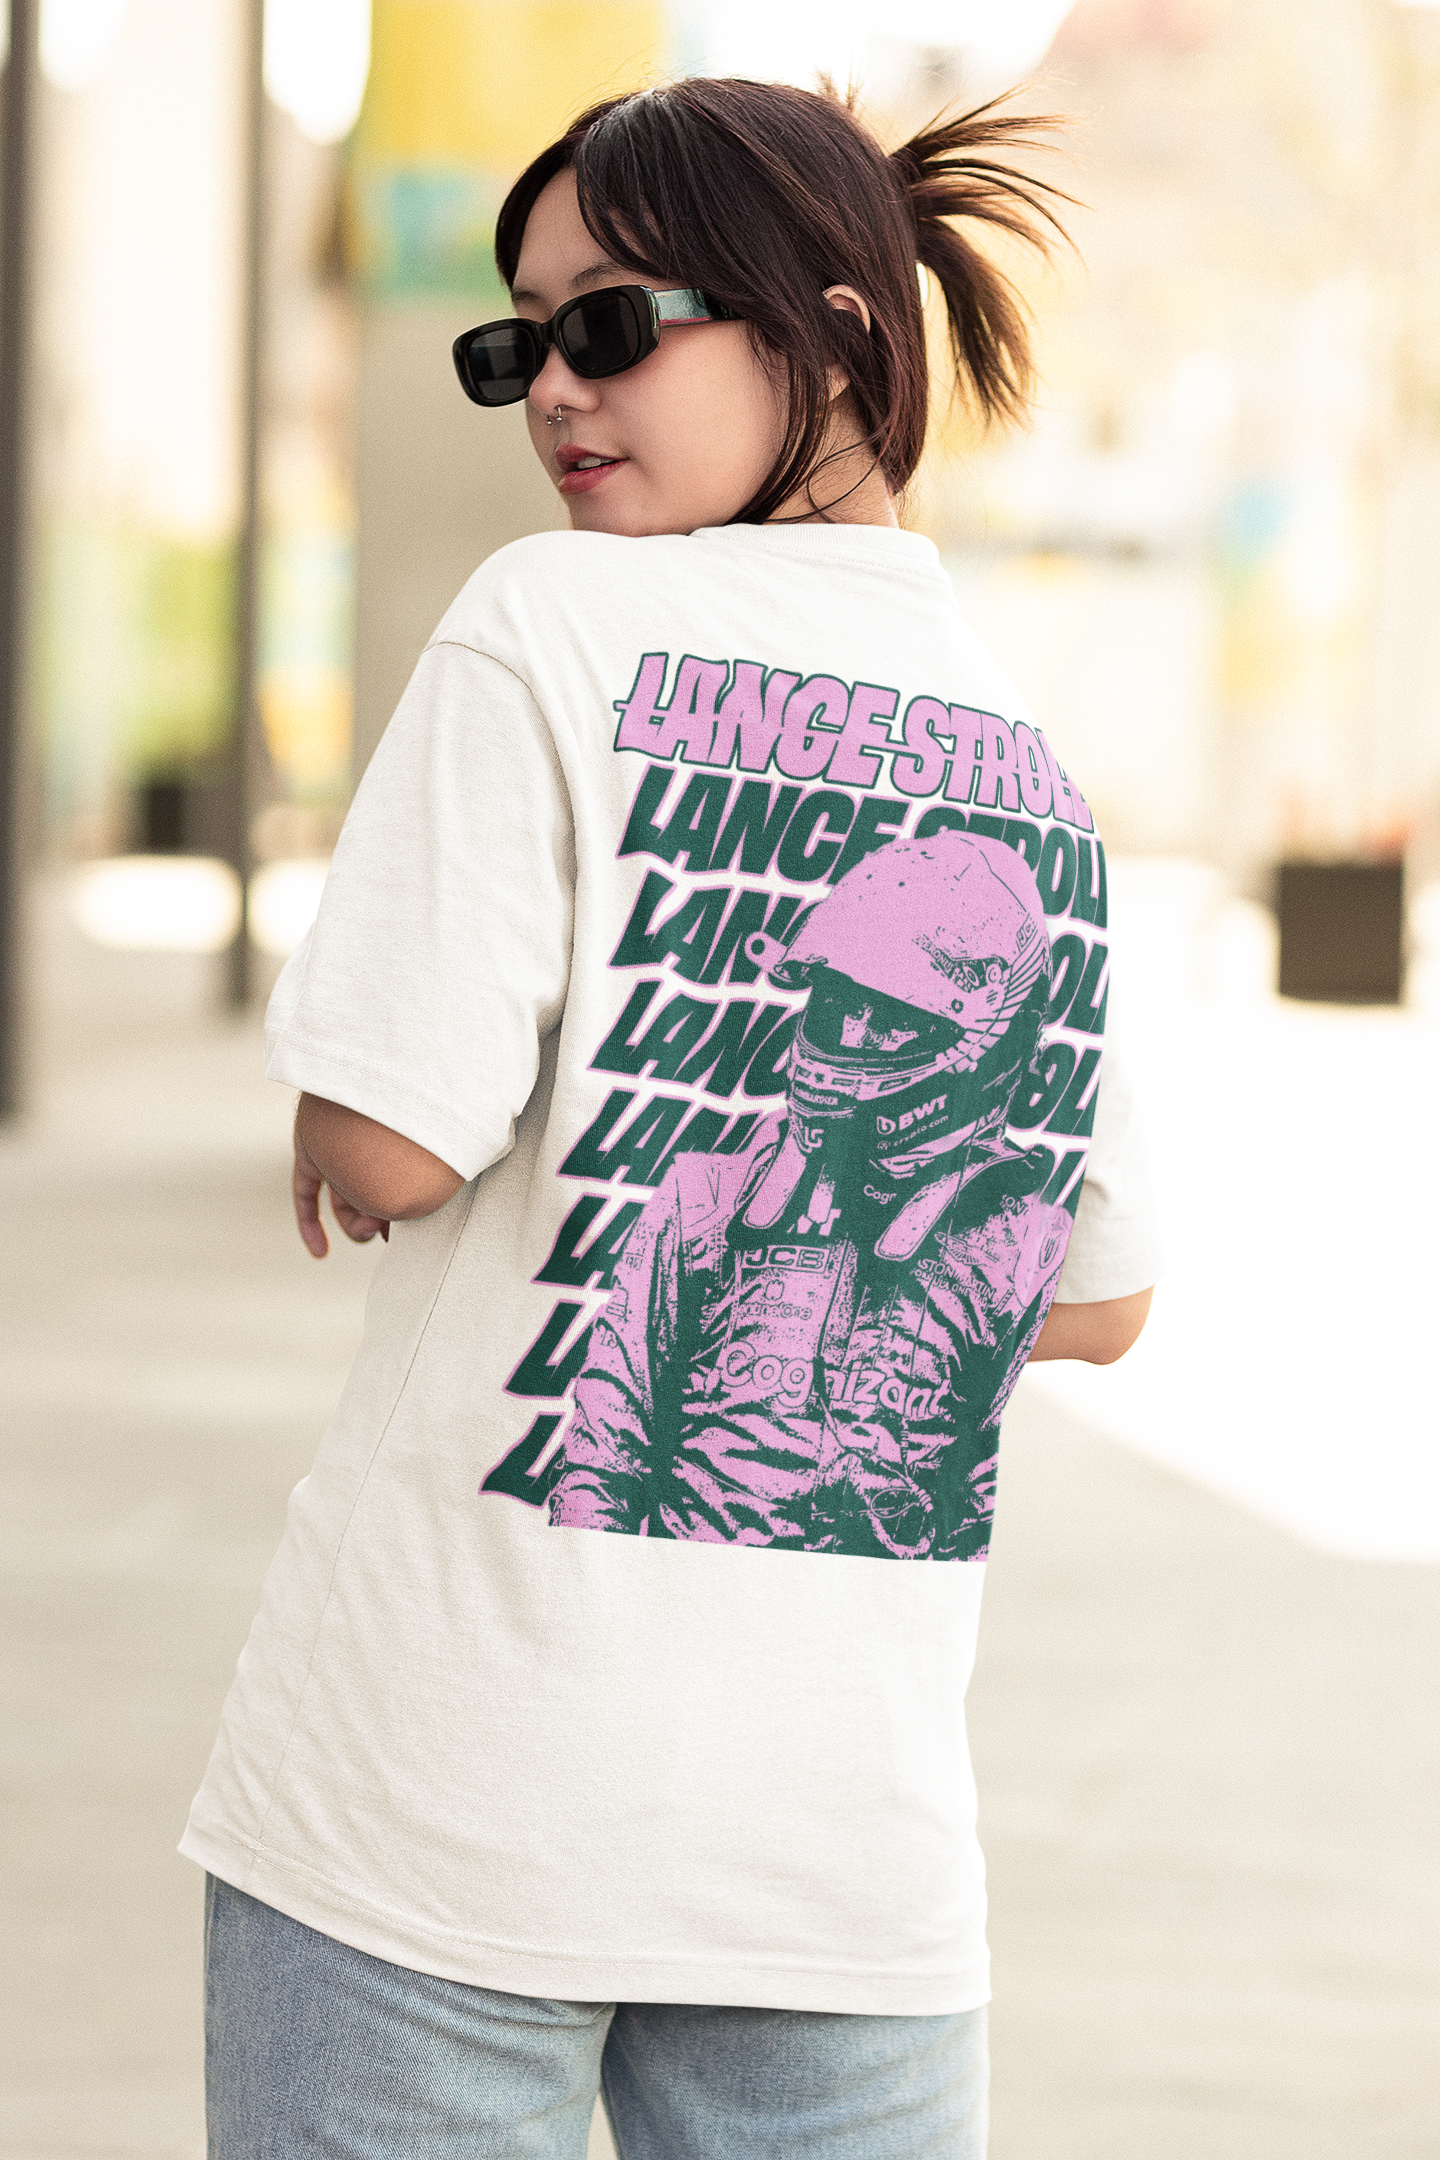 Lance Stroll Premium oversized T-Shirt WOMEN